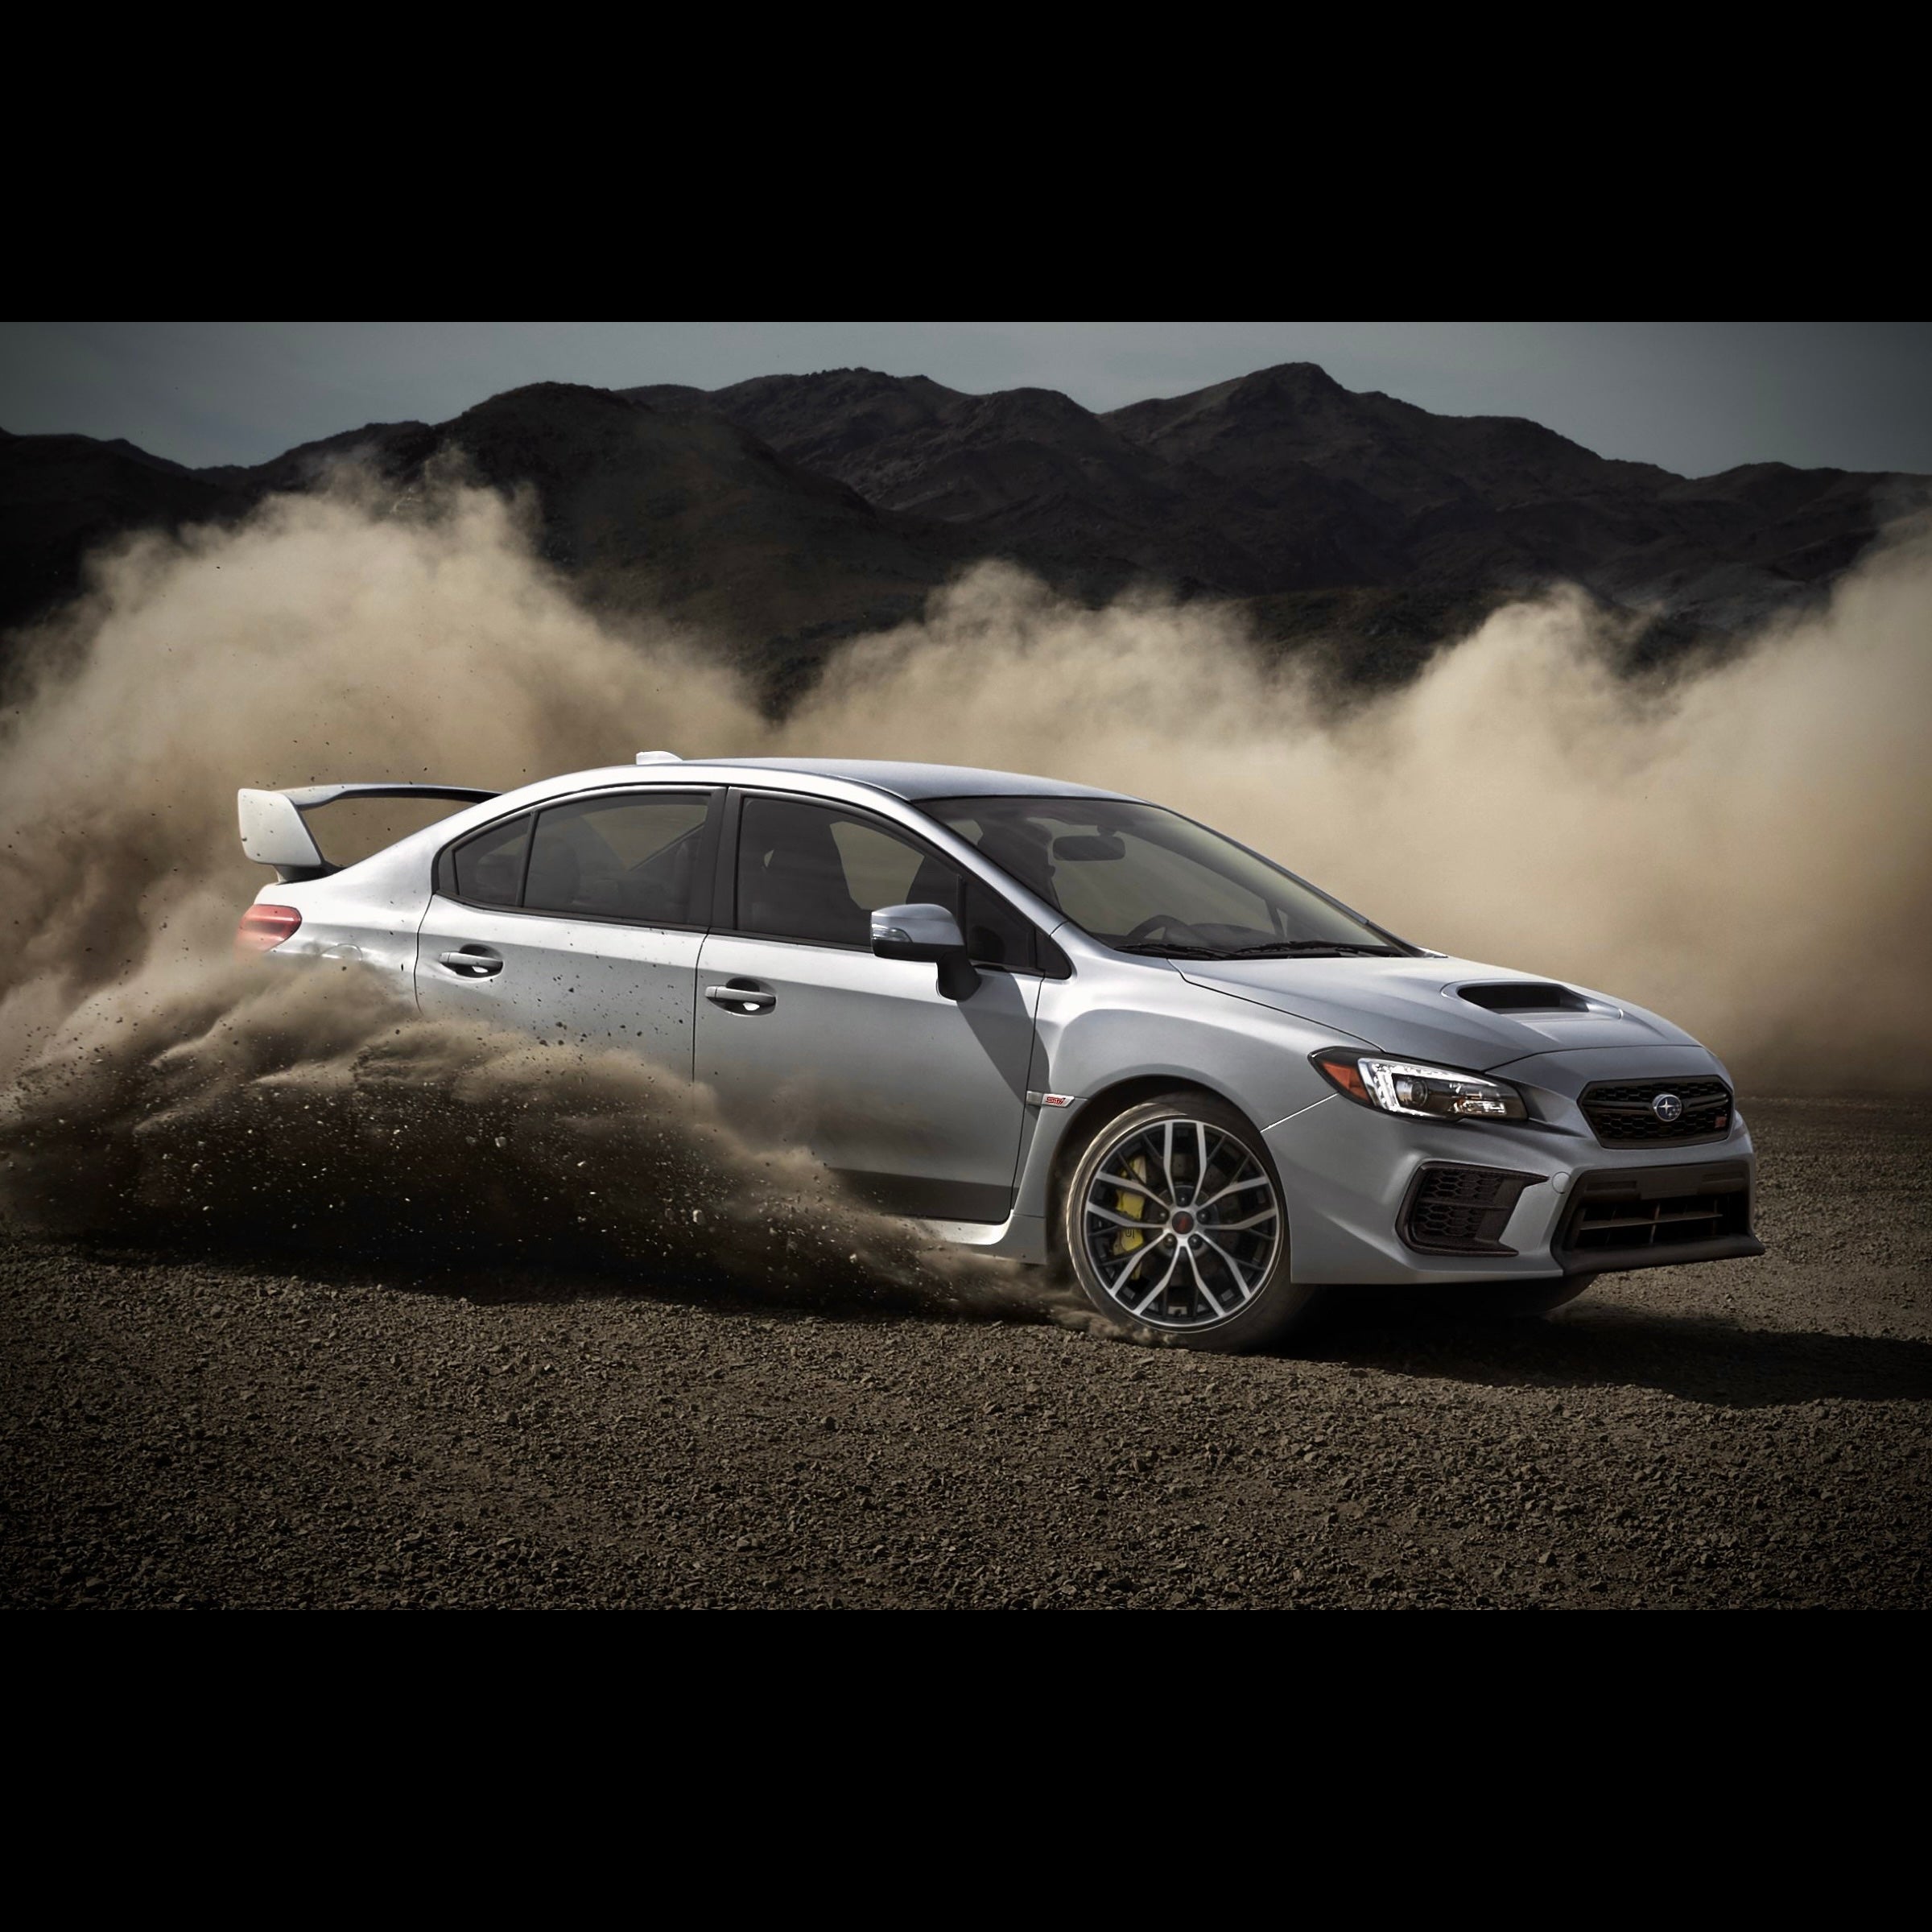 White Subaru WRX STI spinning tire in dirt